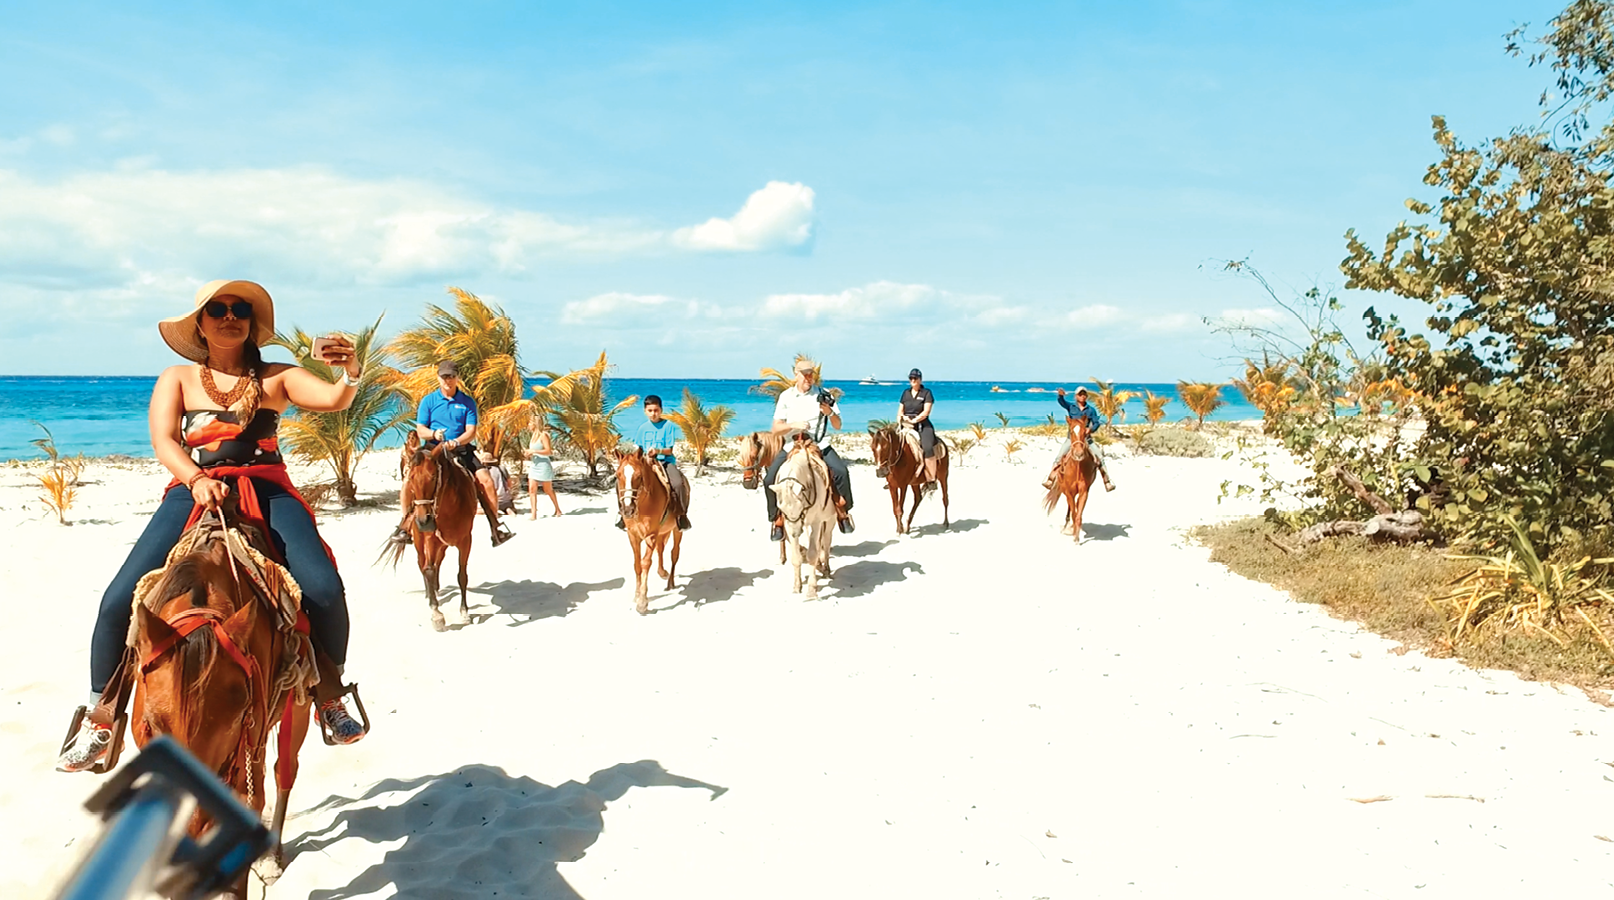 People Riding on Horseback on a beach